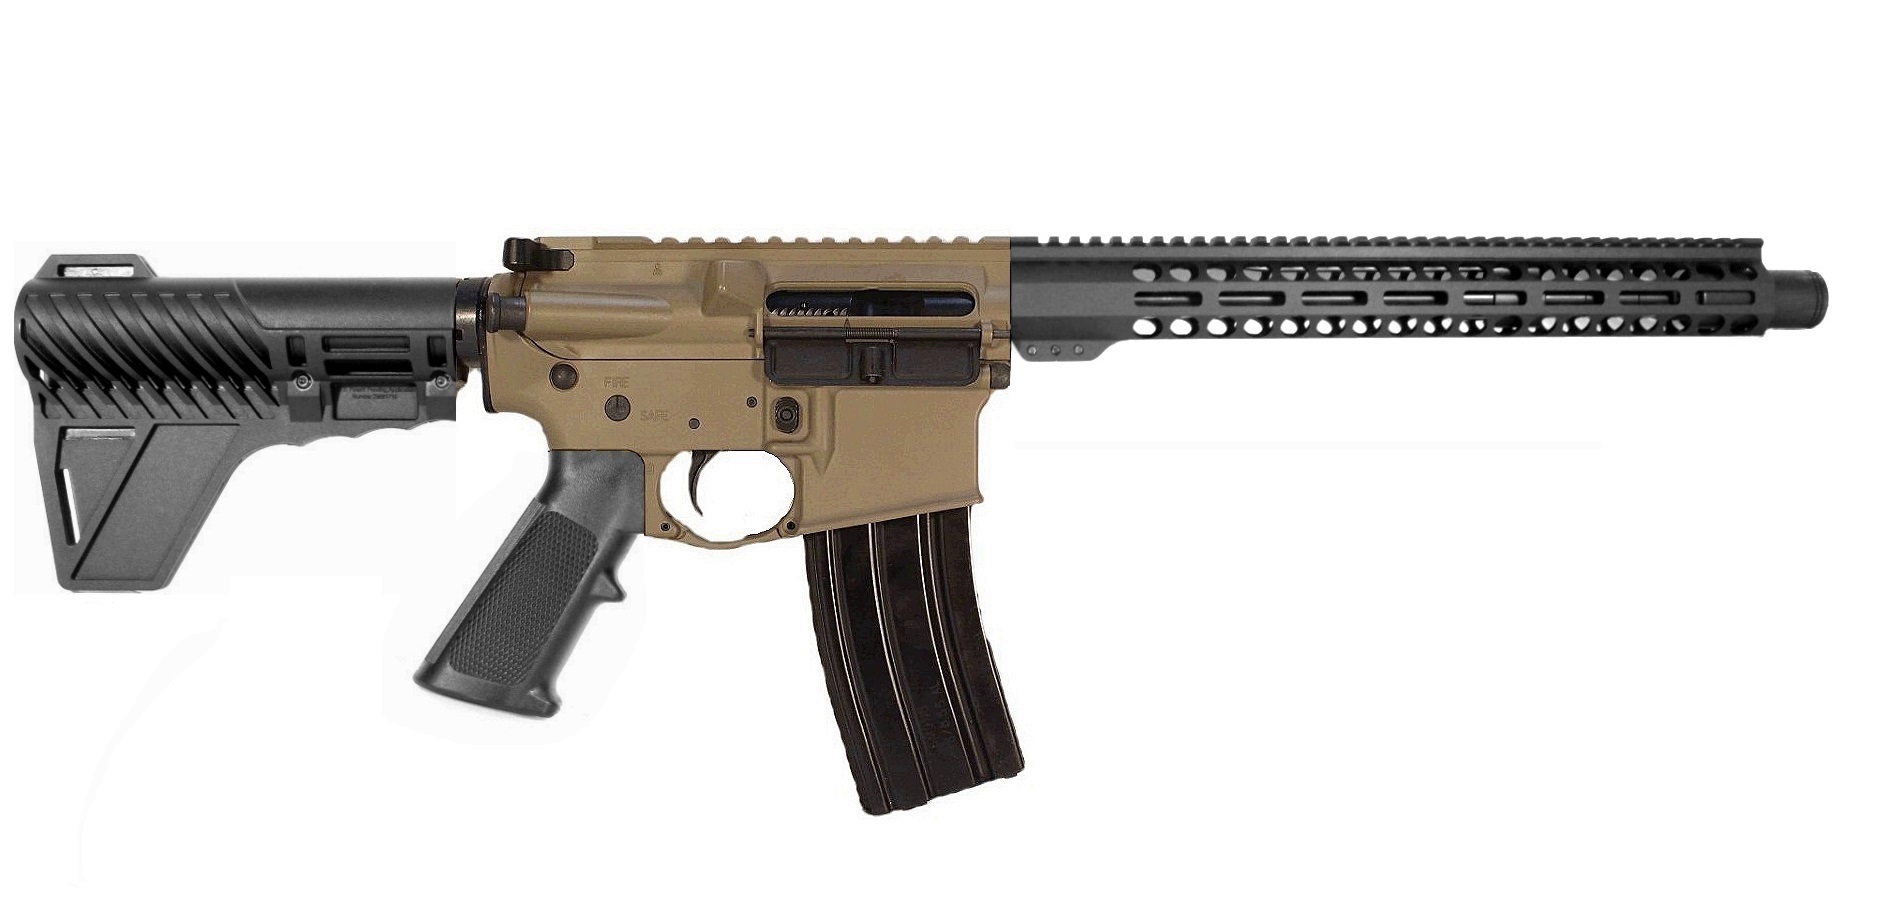 13.7 inch 5.56 NATO AR-15 Pistol | Ultimate Self Defense Tool